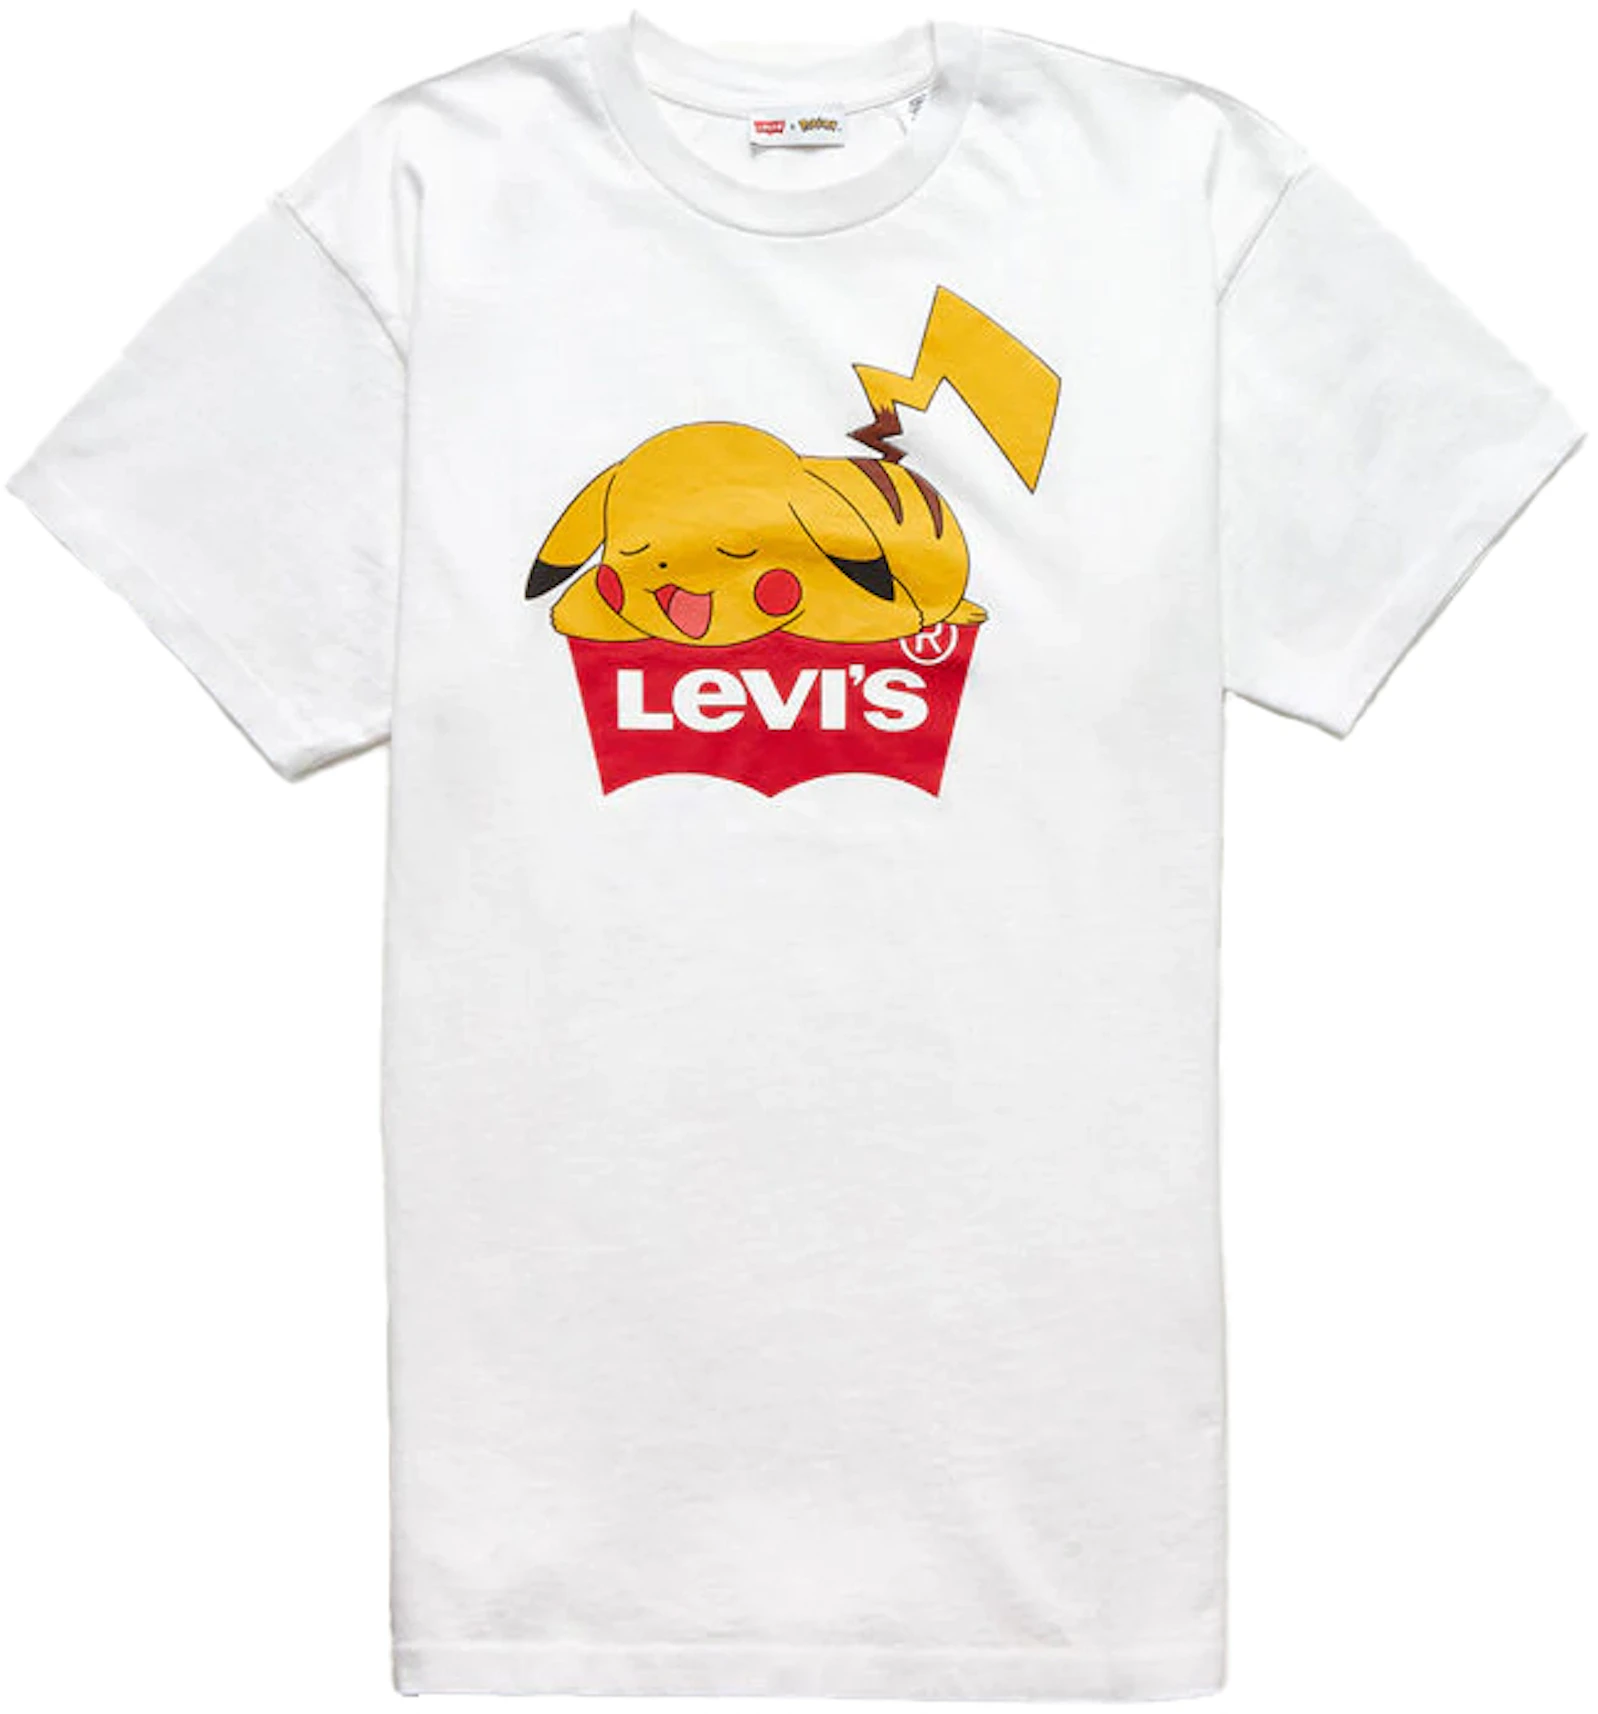 Levis x Pokémon Pikachu Unisex Short Sleeve T-shirt White - SS21 - US